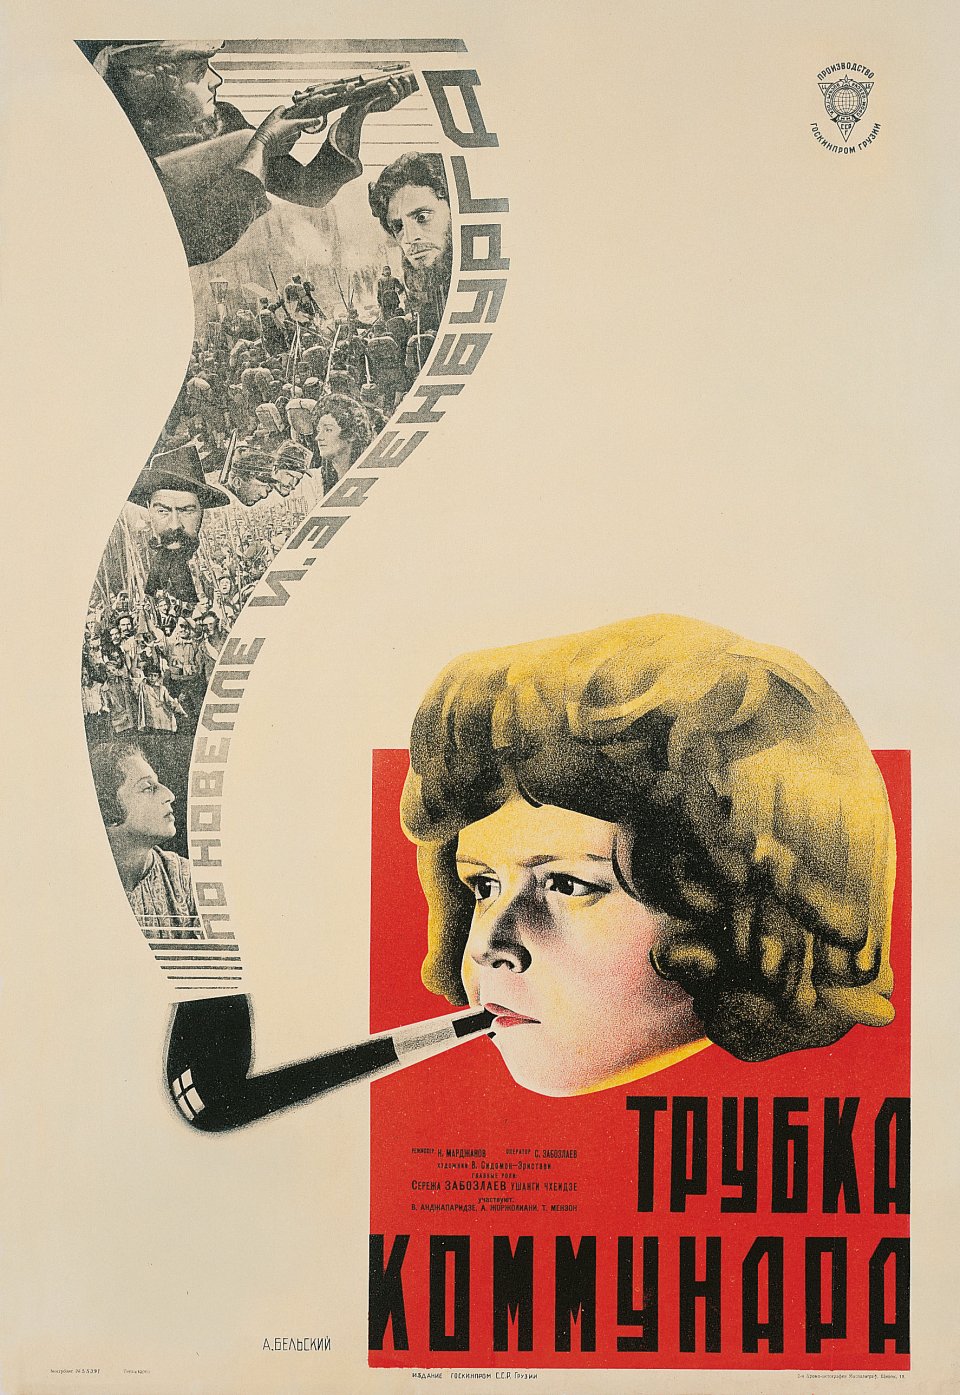 Copyright: © TASCHEN / Susan Pack, California | S. 17 | Anatoly Belsky, Film poster for Trubka Kommunard, 1929 